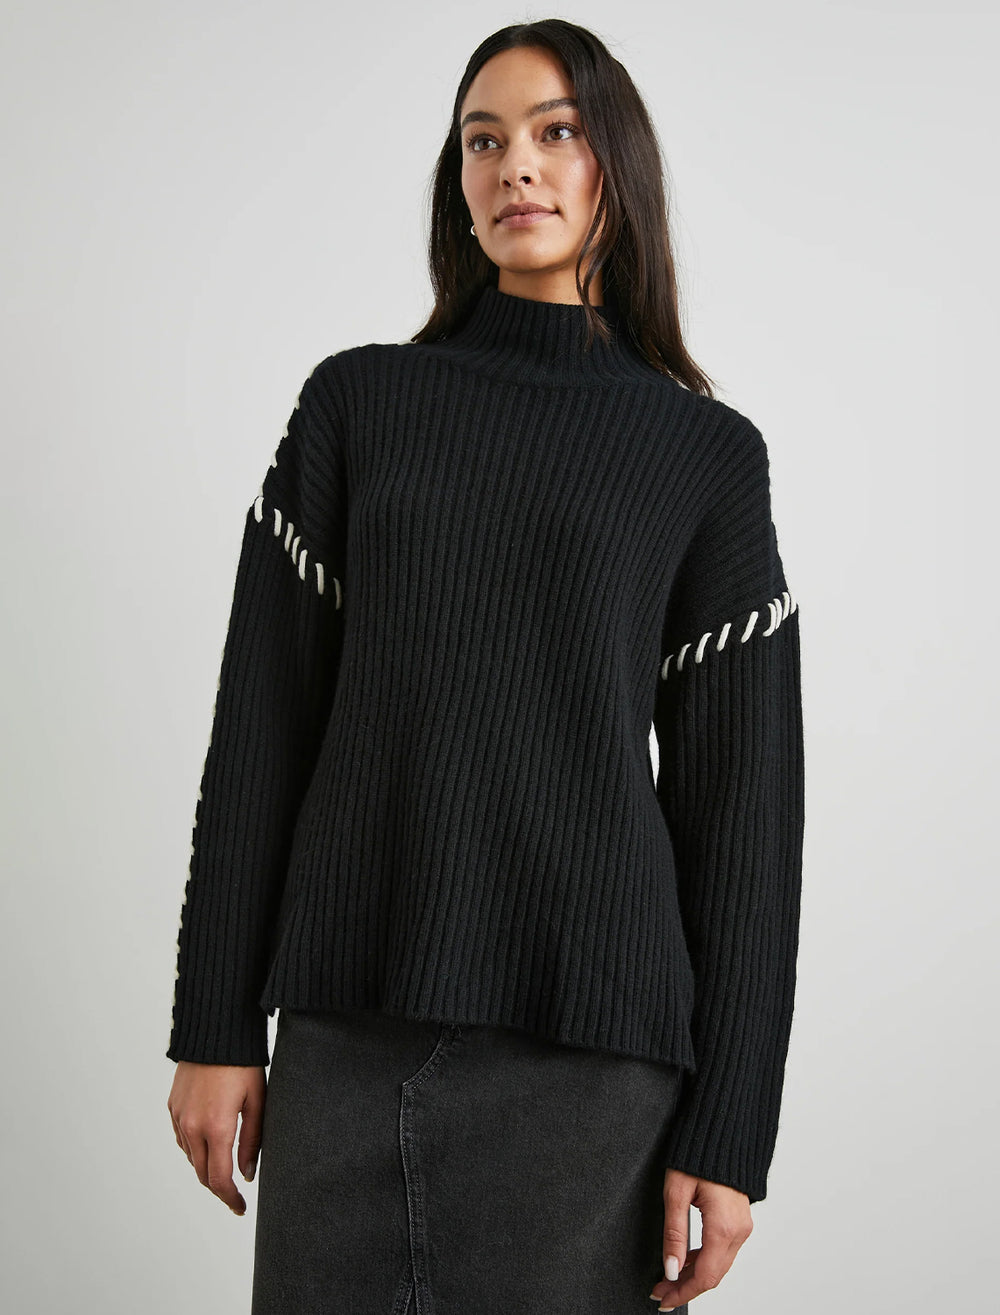 Model wearing Rails' liam pullover in black.